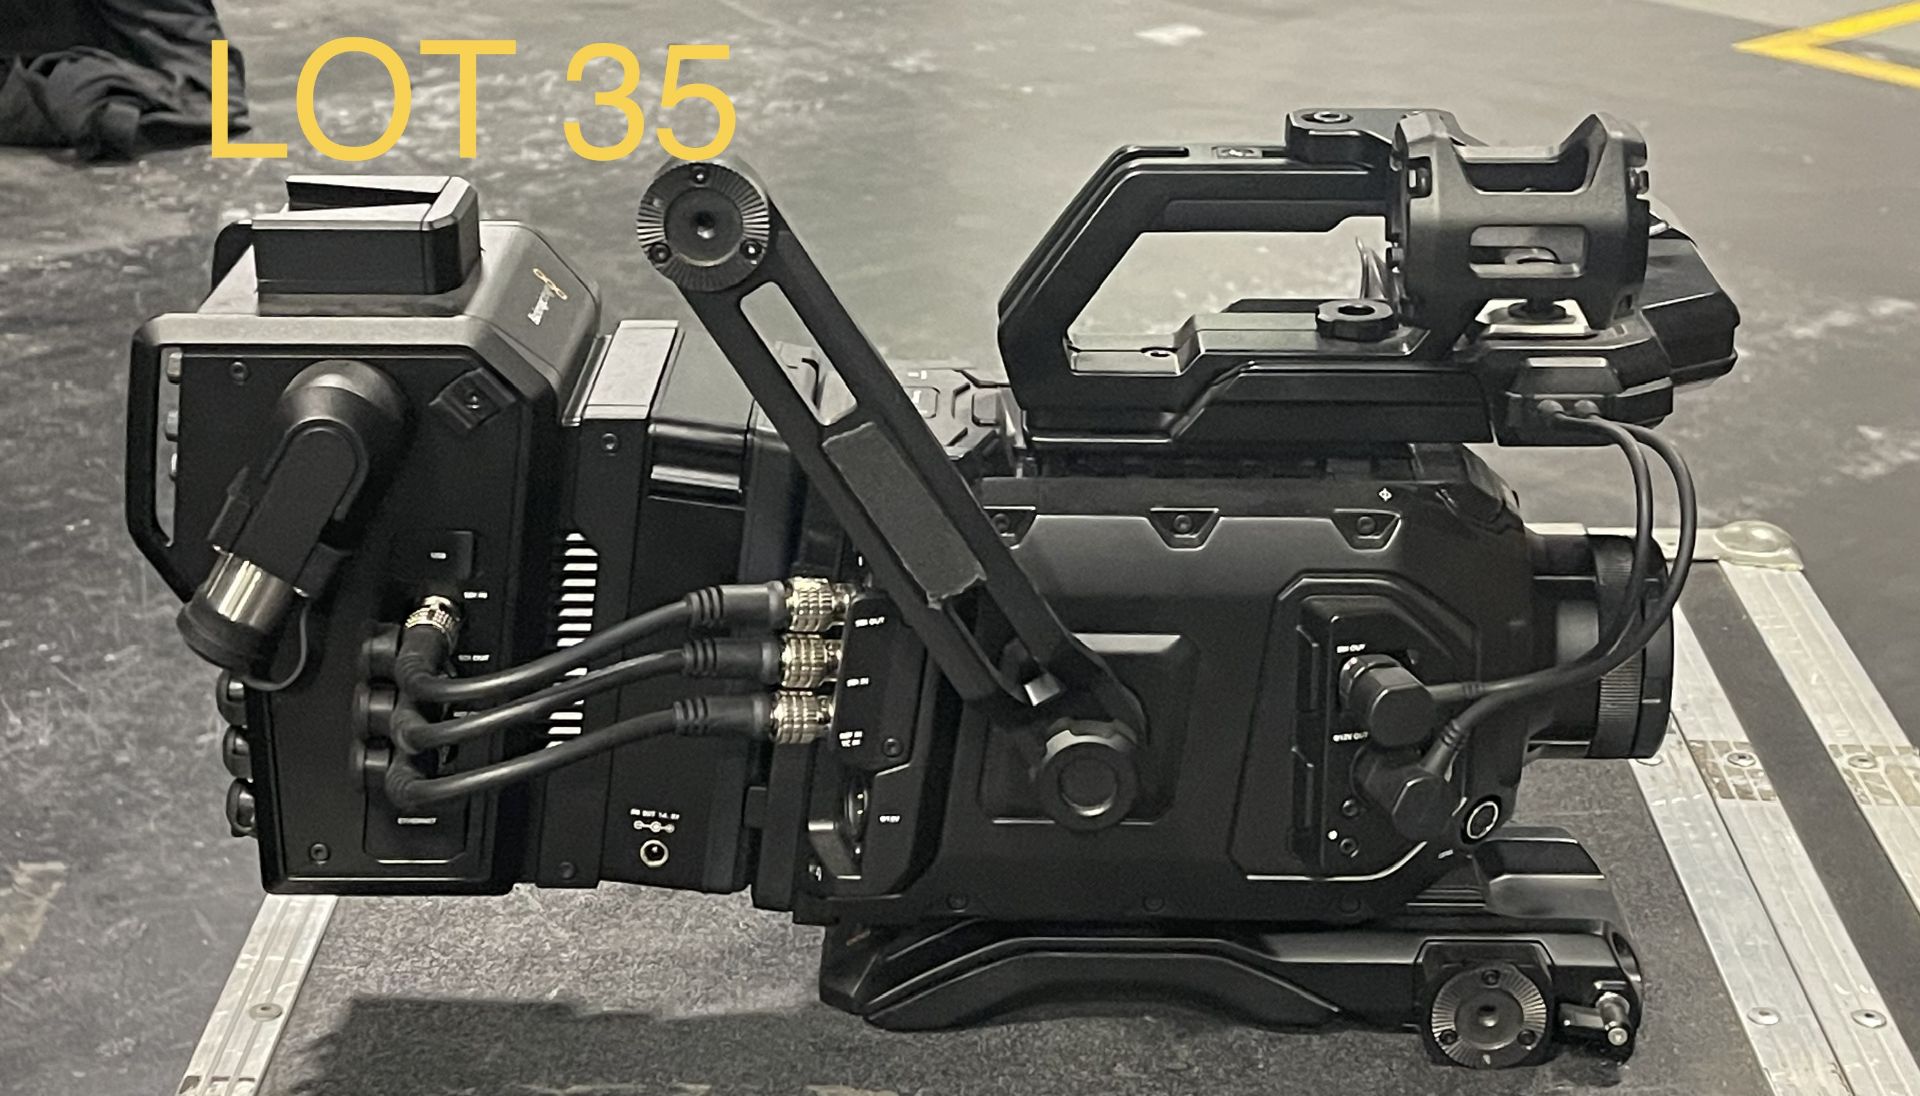 2019 Black Magic Cameras, 4.6k G2 mini, SN: 5523836